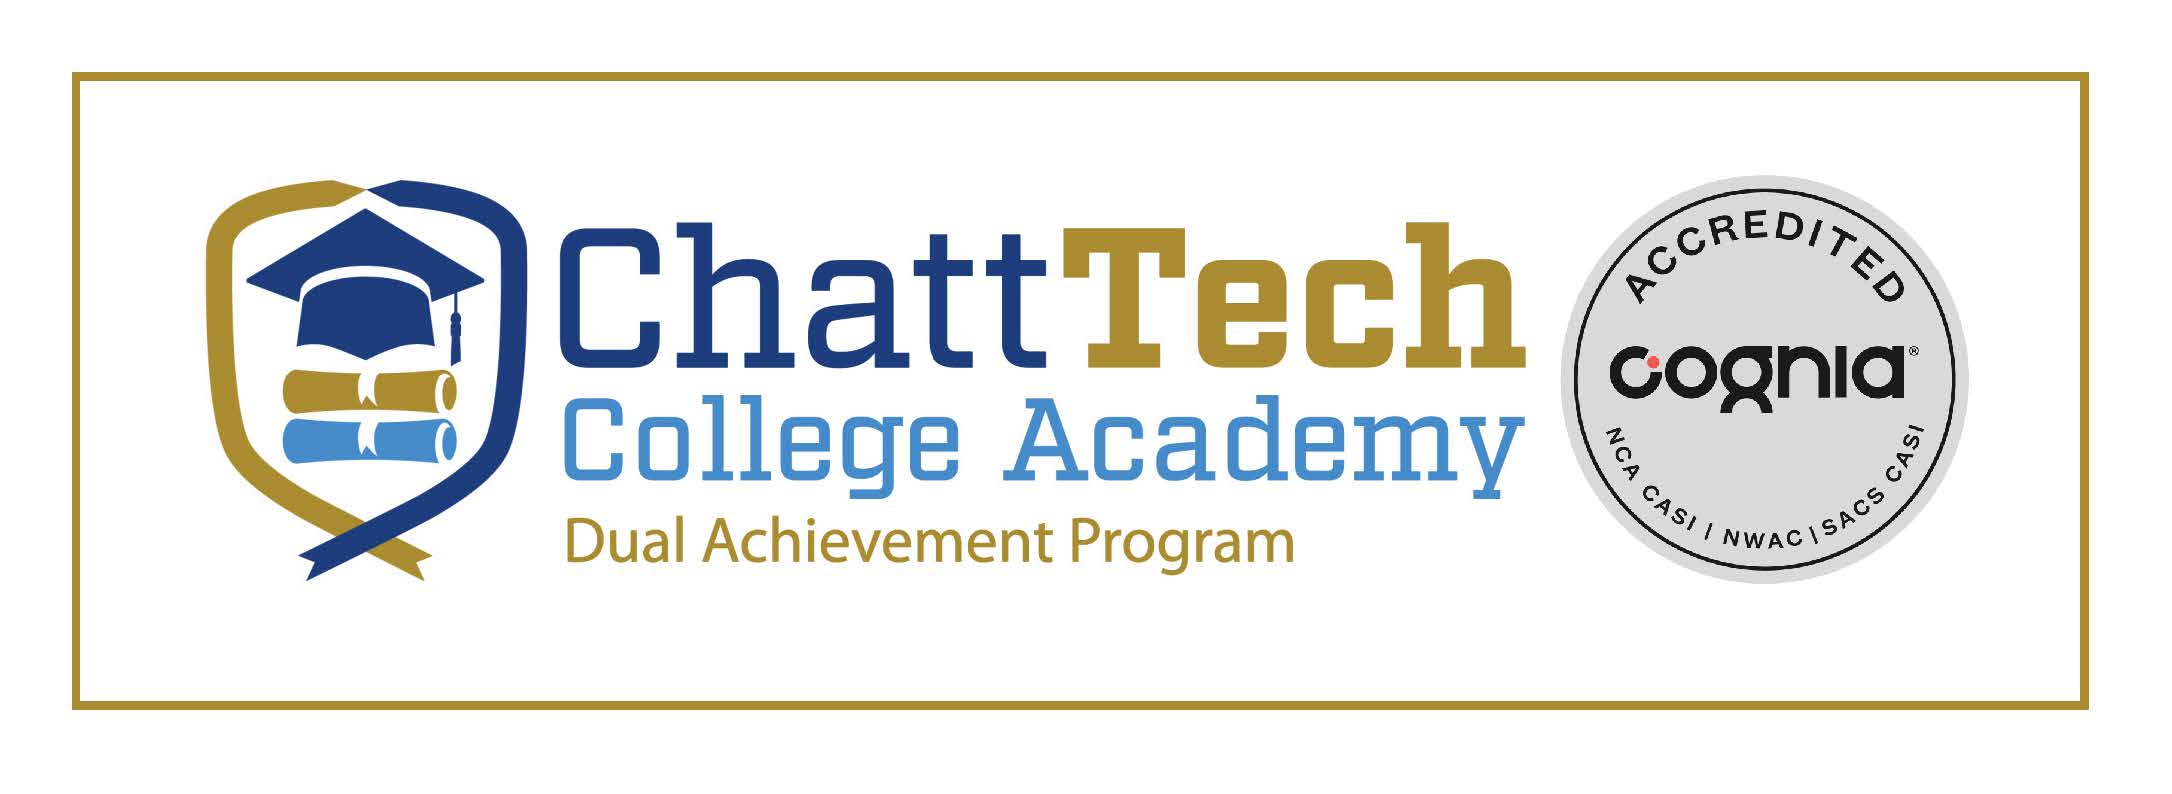 Chatt Tech College Academy Logo and Accreditation Logo